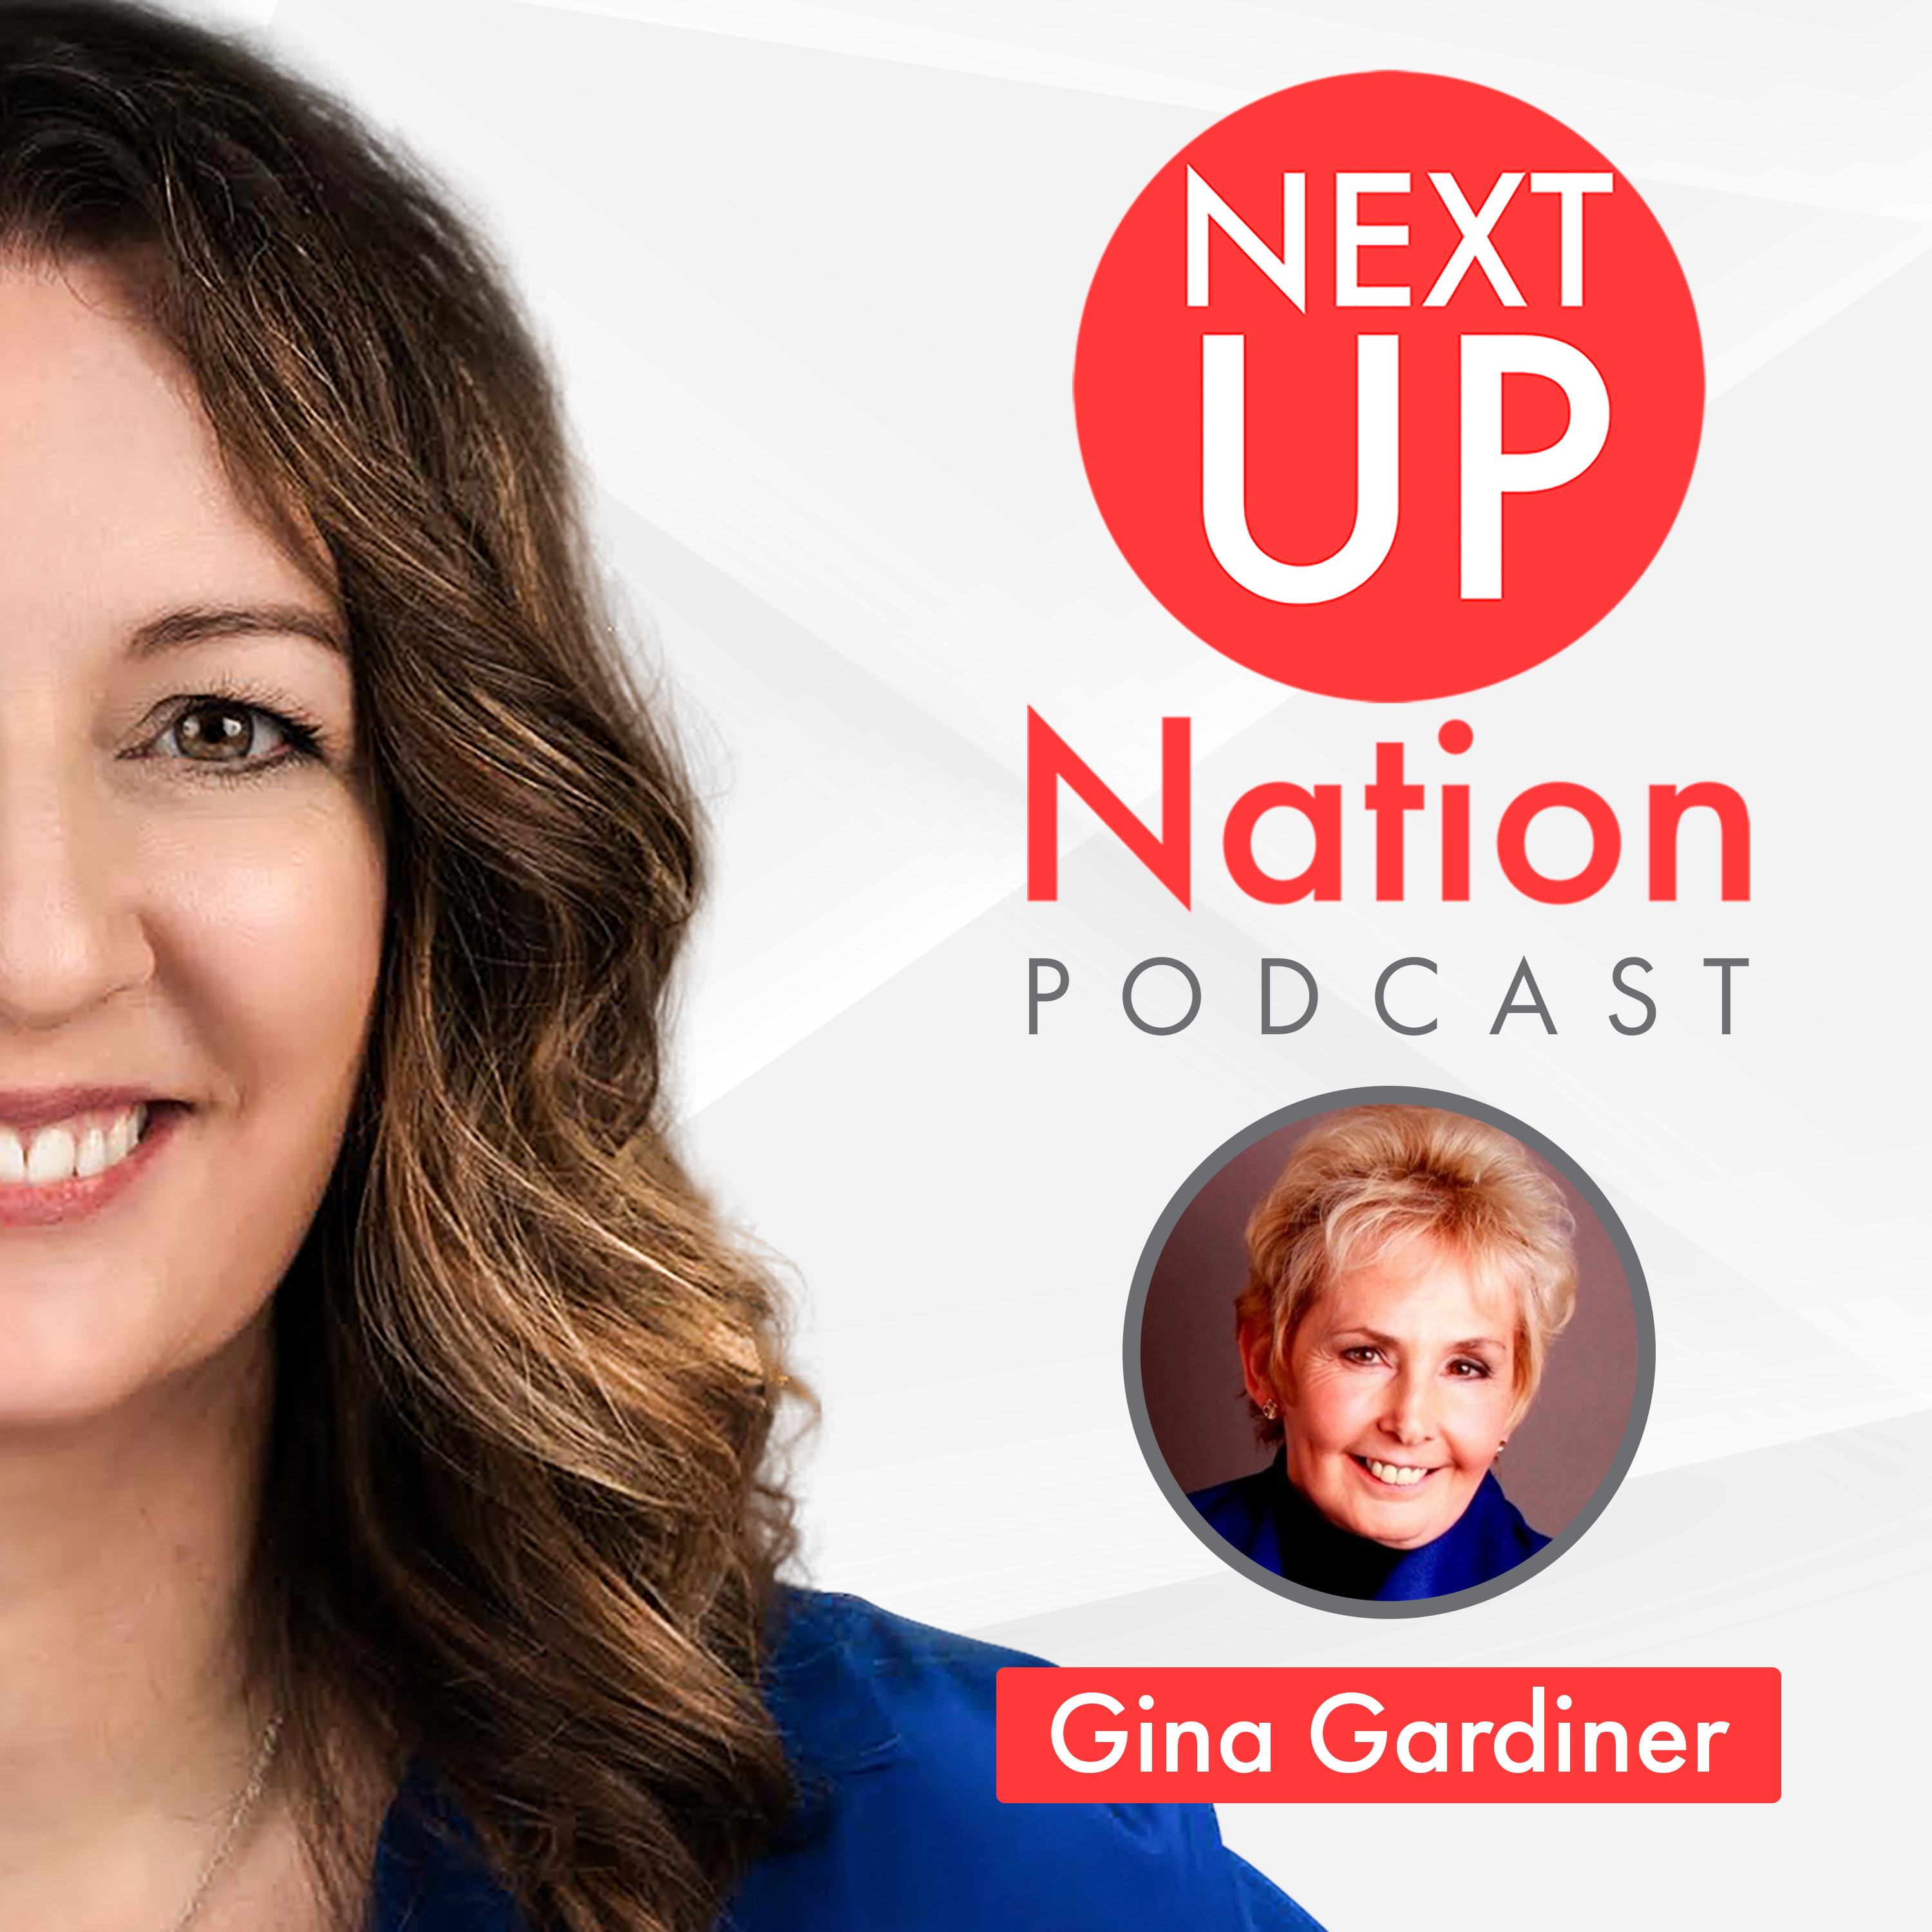 Challenge Well, or Change! True Leadership Speaks Volumes, with Gina Gardiner